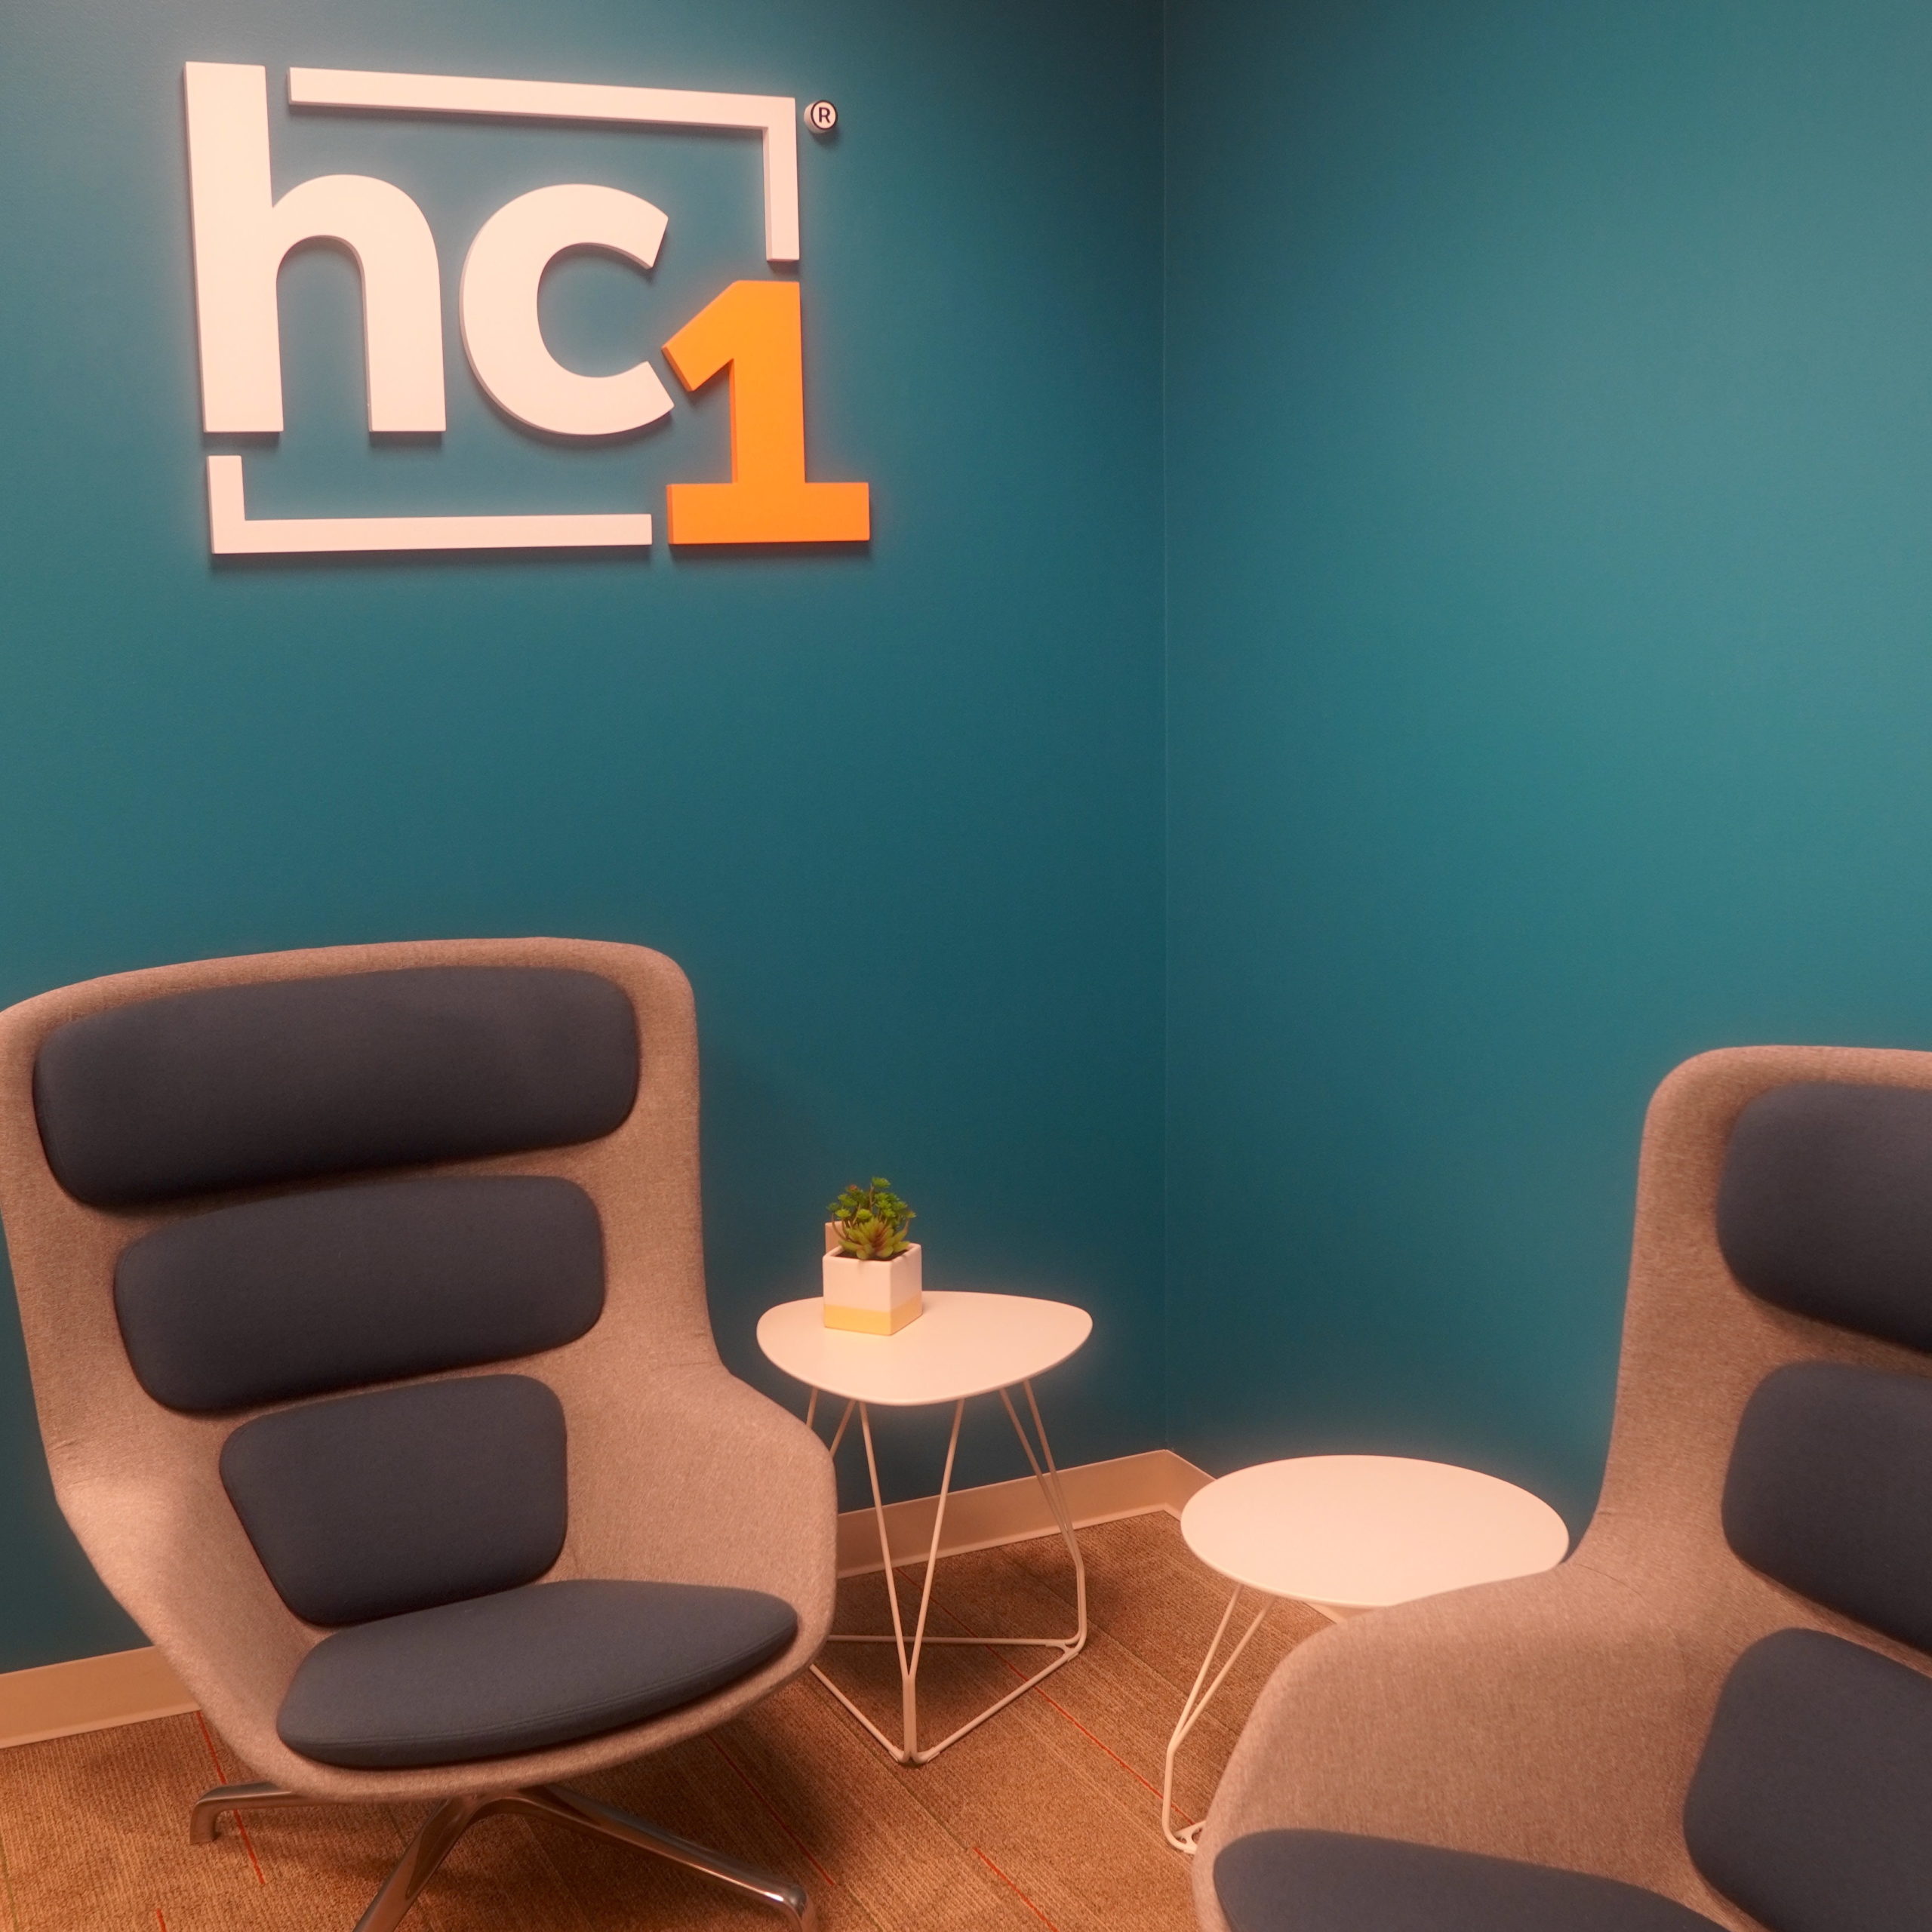 hc1 office interior.